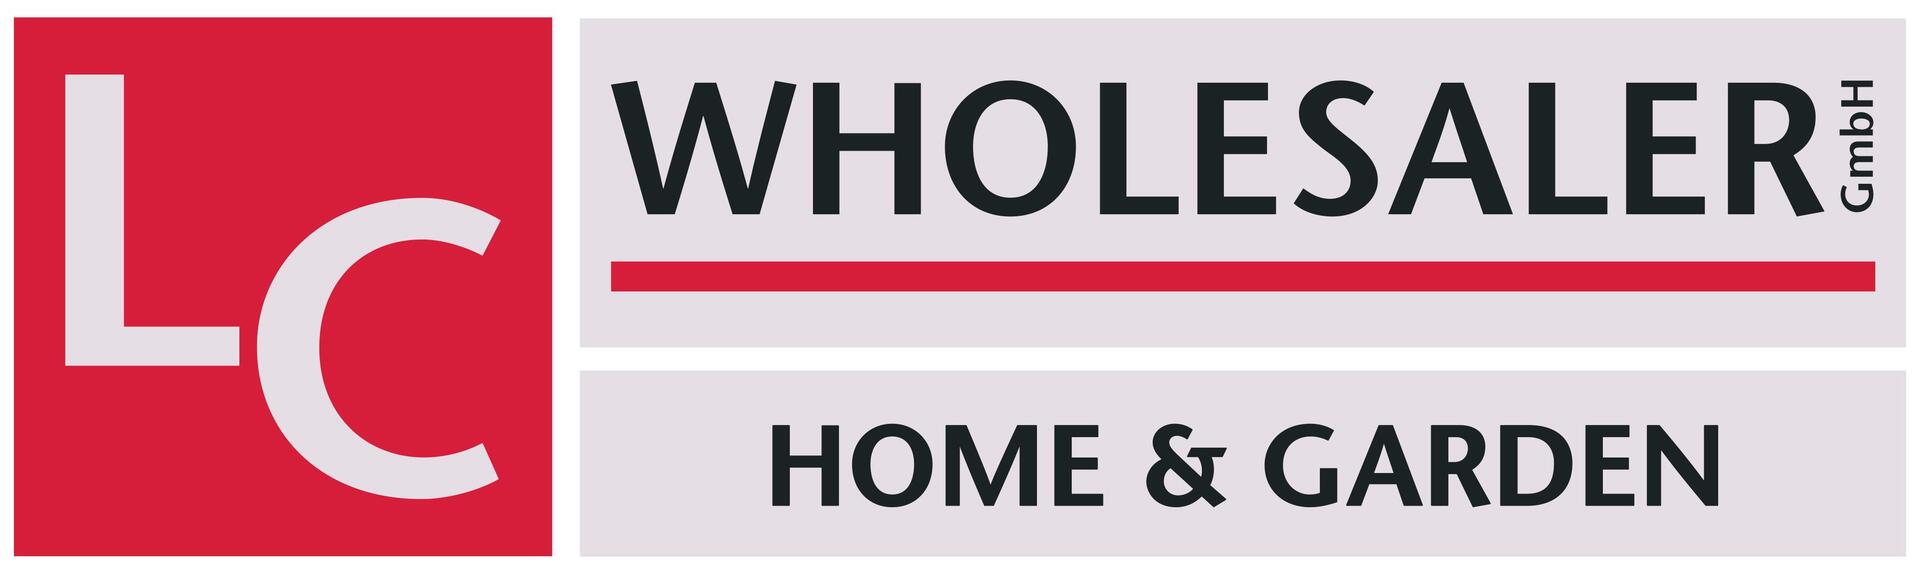 LC WHOLESALER-logo